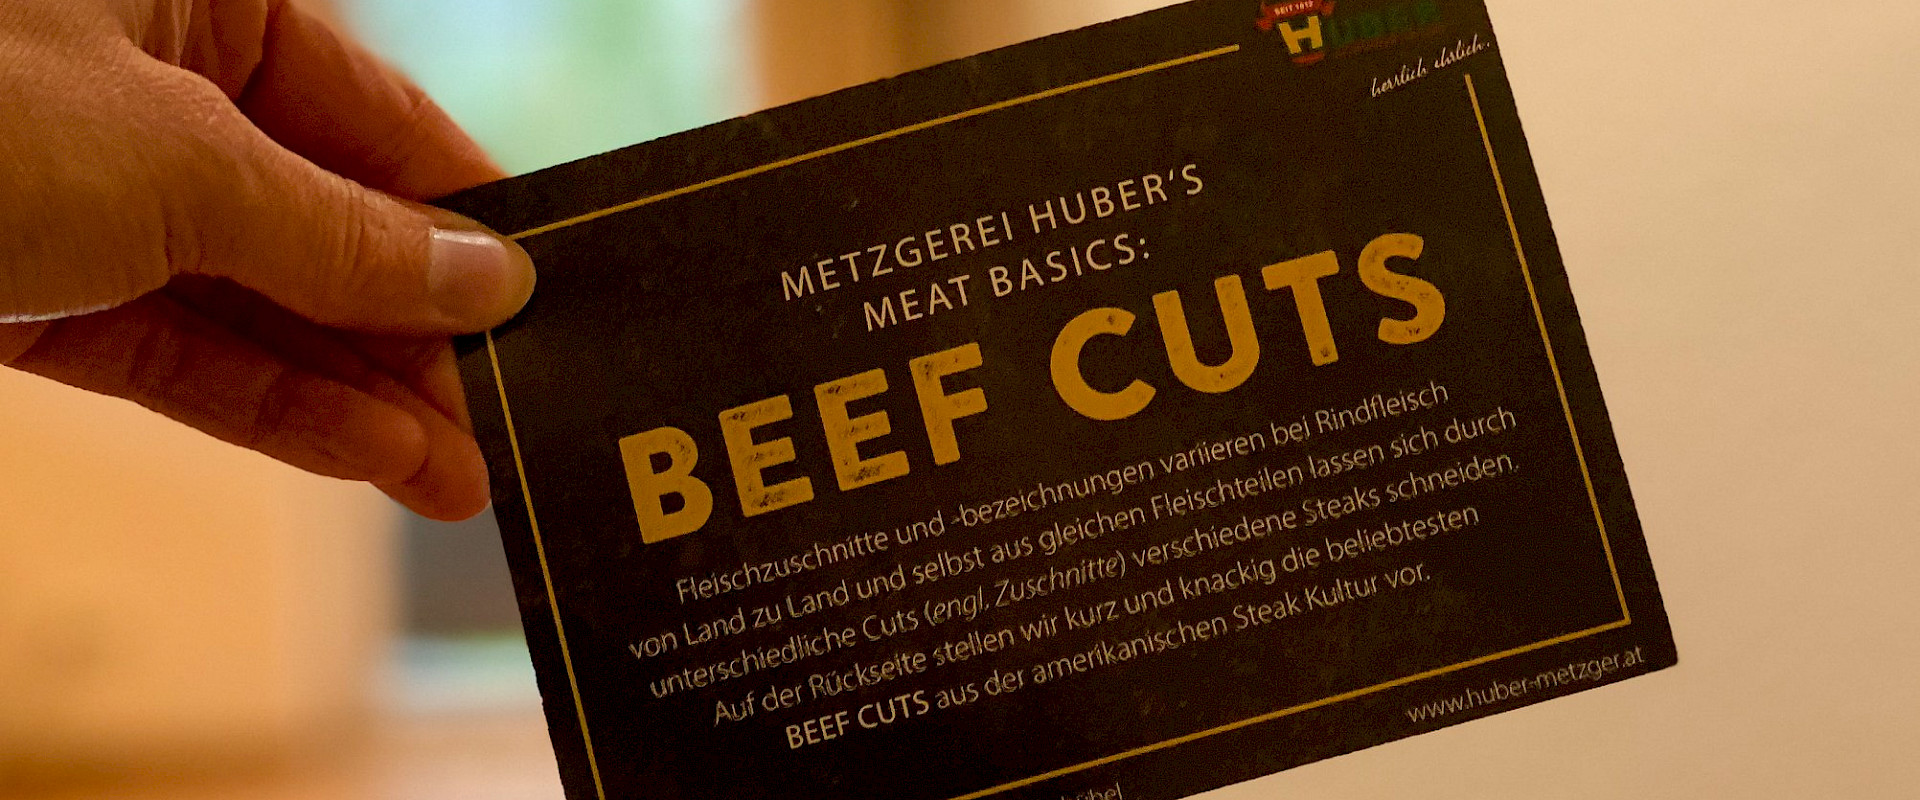 NEU: Huber's Meat Basics zum Mitnehmen.